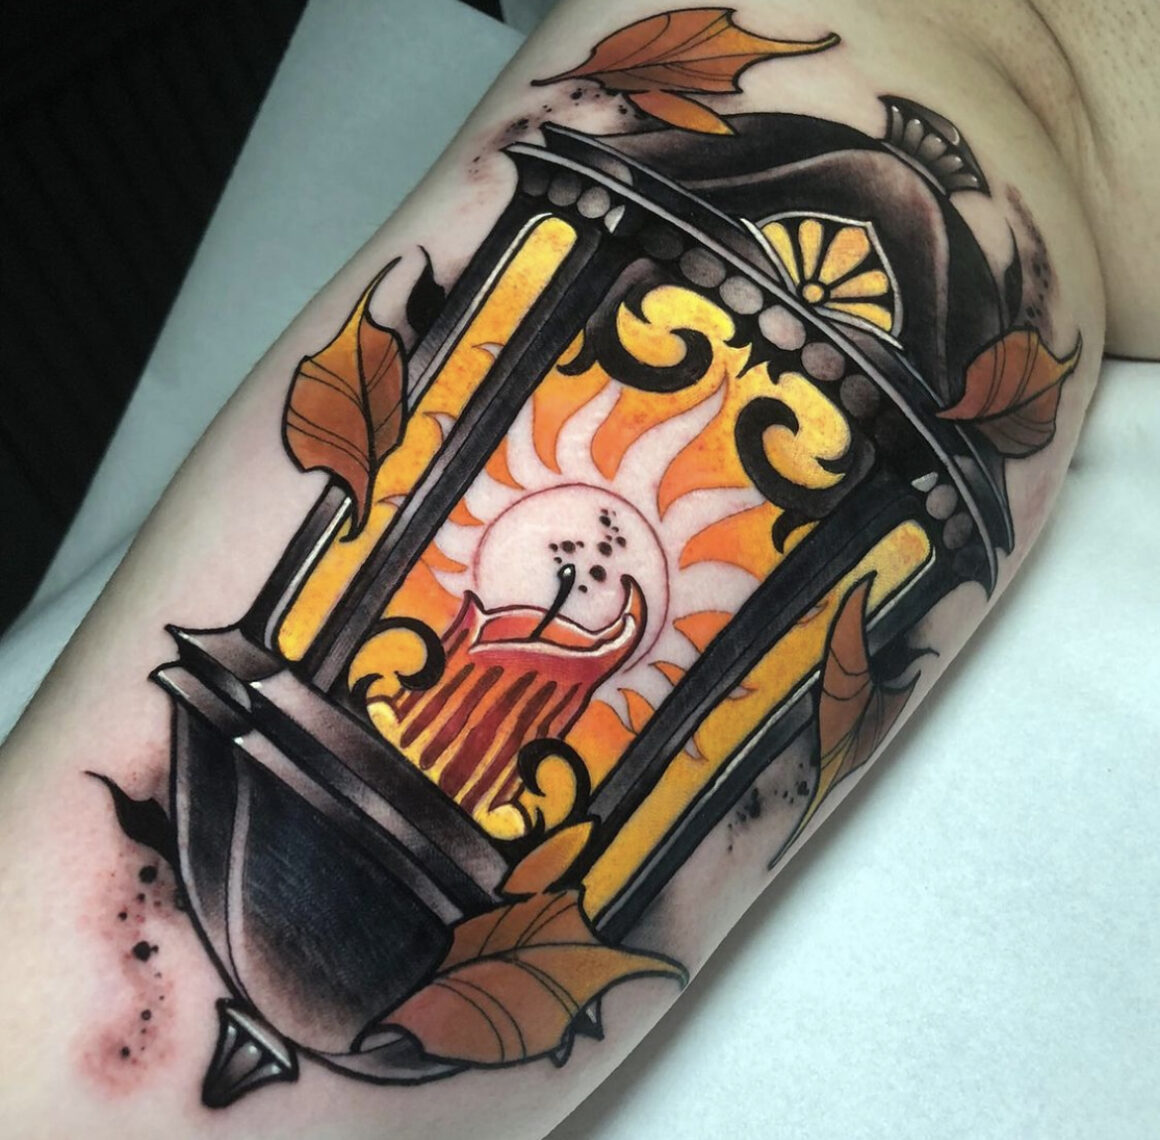 Traditional lantern piece by Nick Kaufman at Flesh Tattoo in Fallston MD   rtattoos